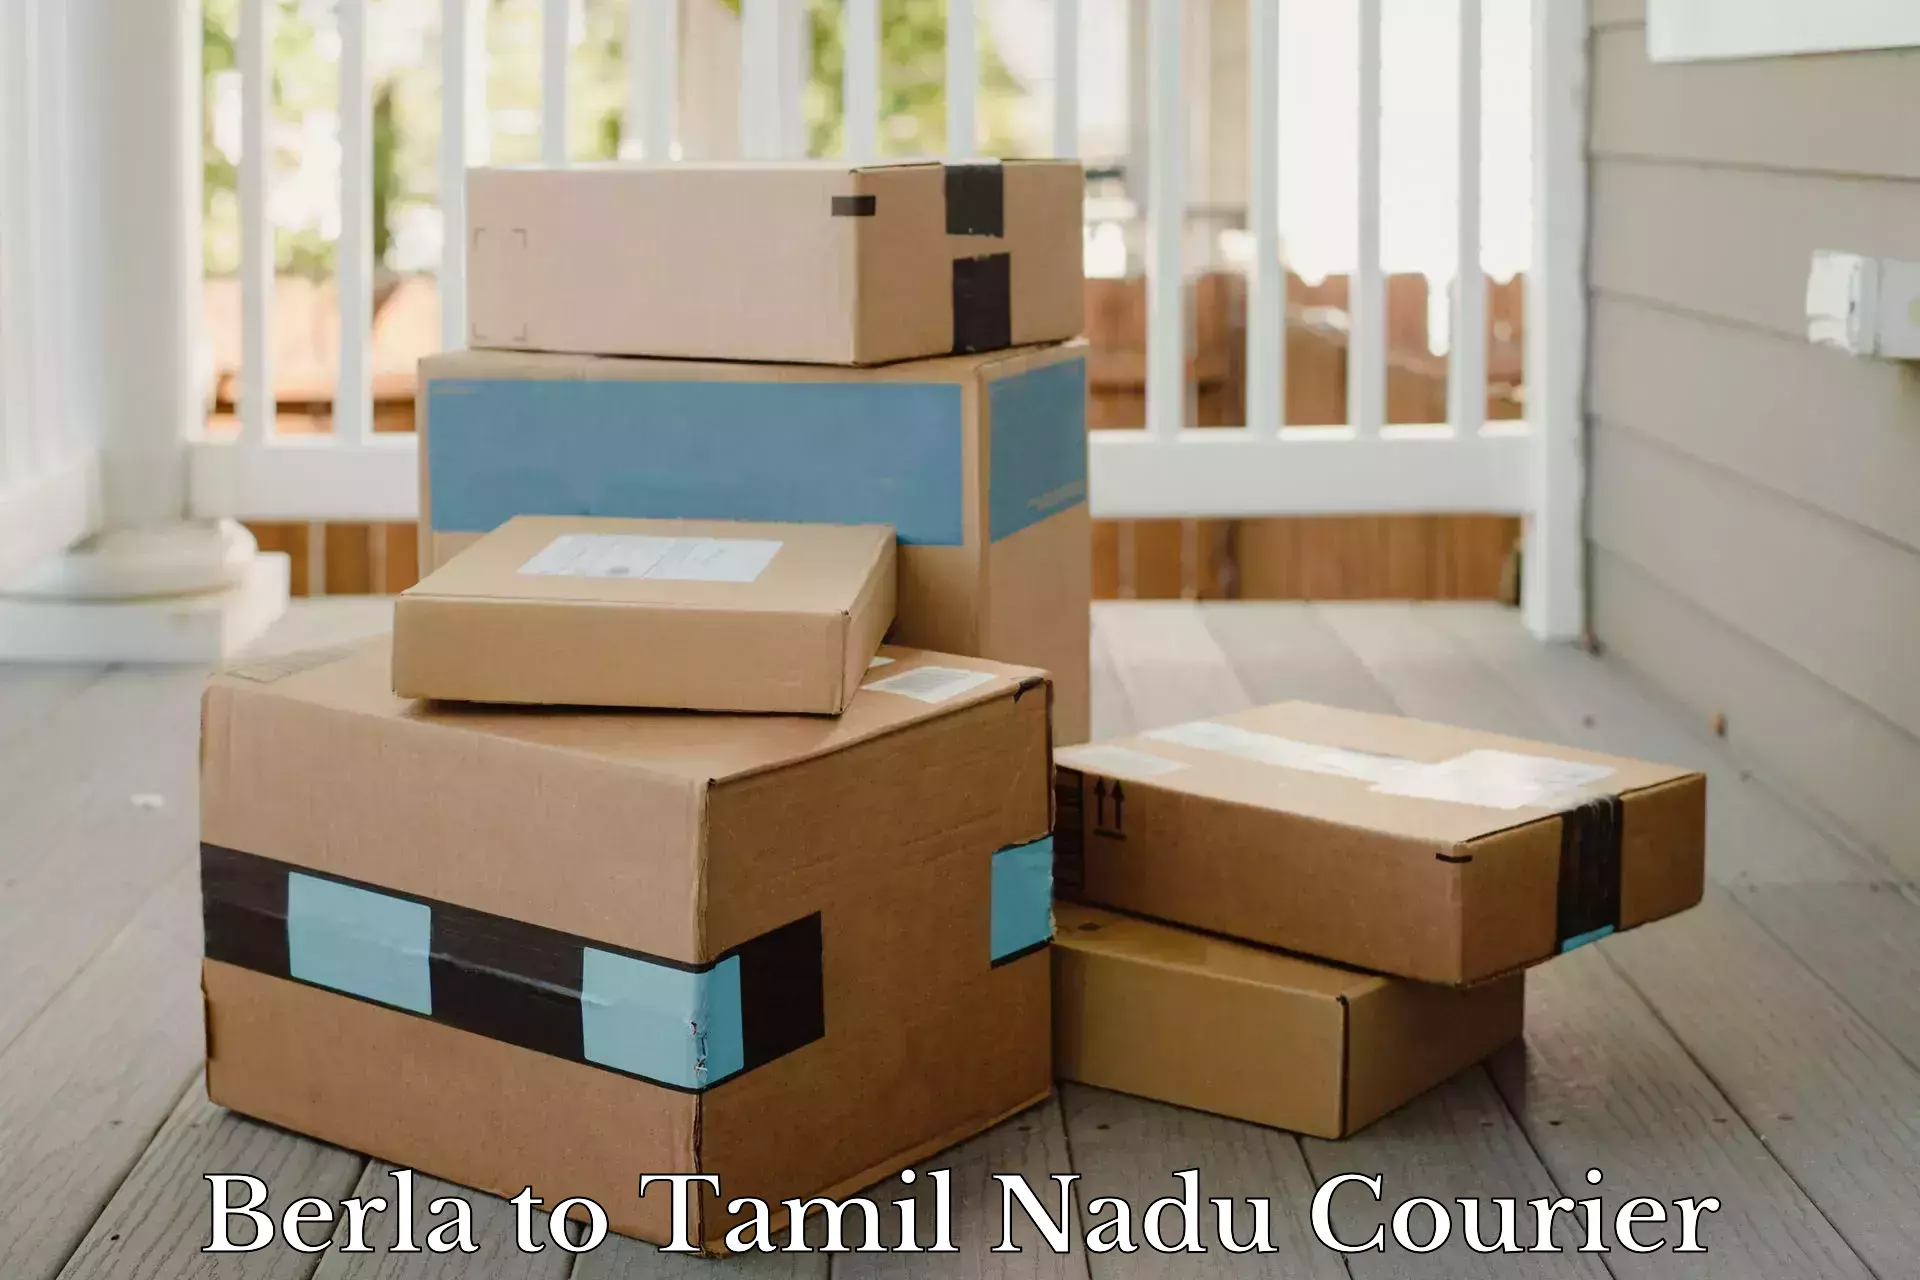 Doorstep delivery service Berla to Chennai